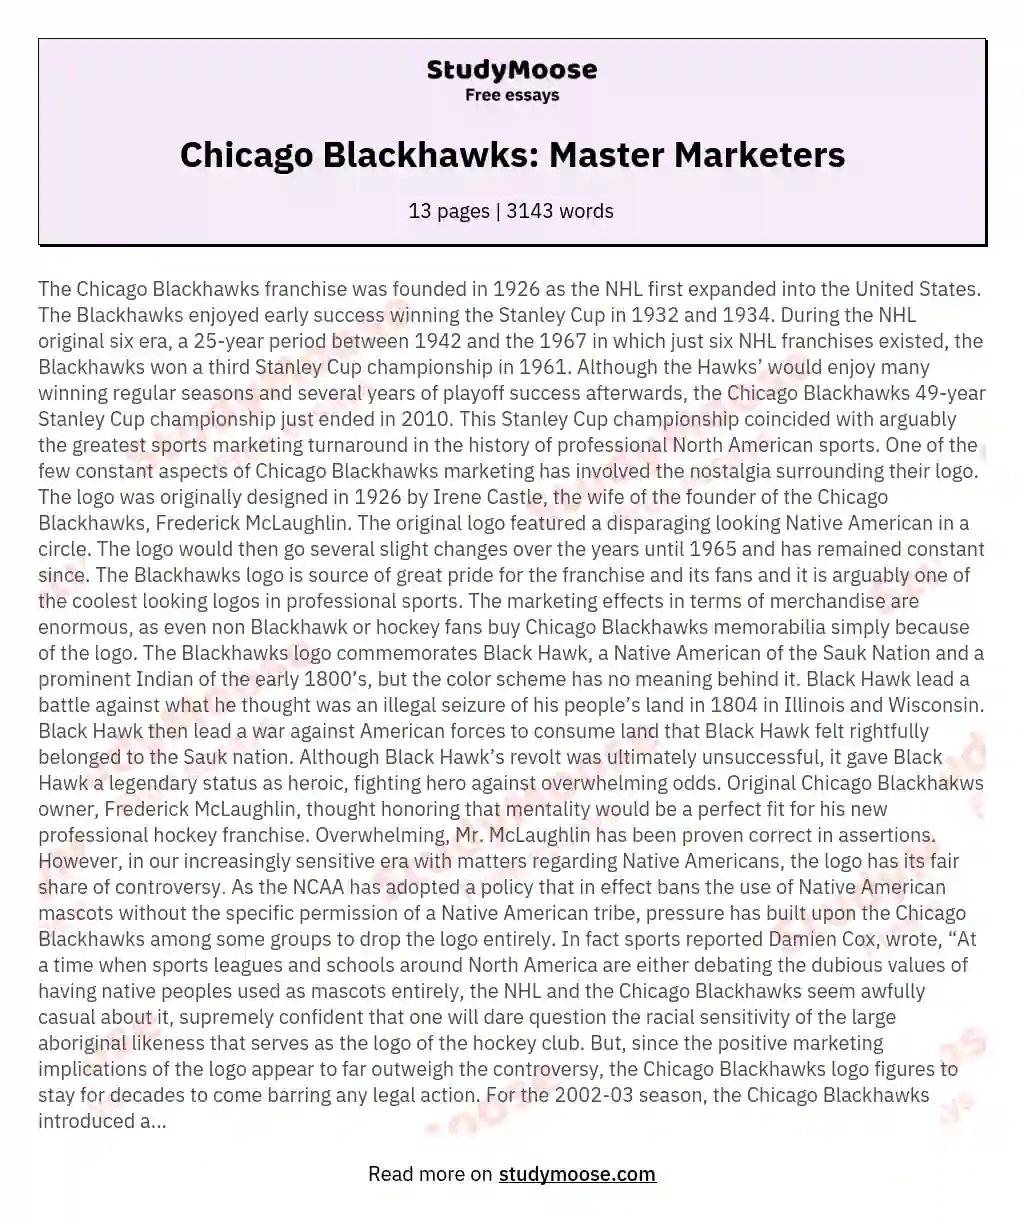 Chicago Blackhawks: Master Marketers